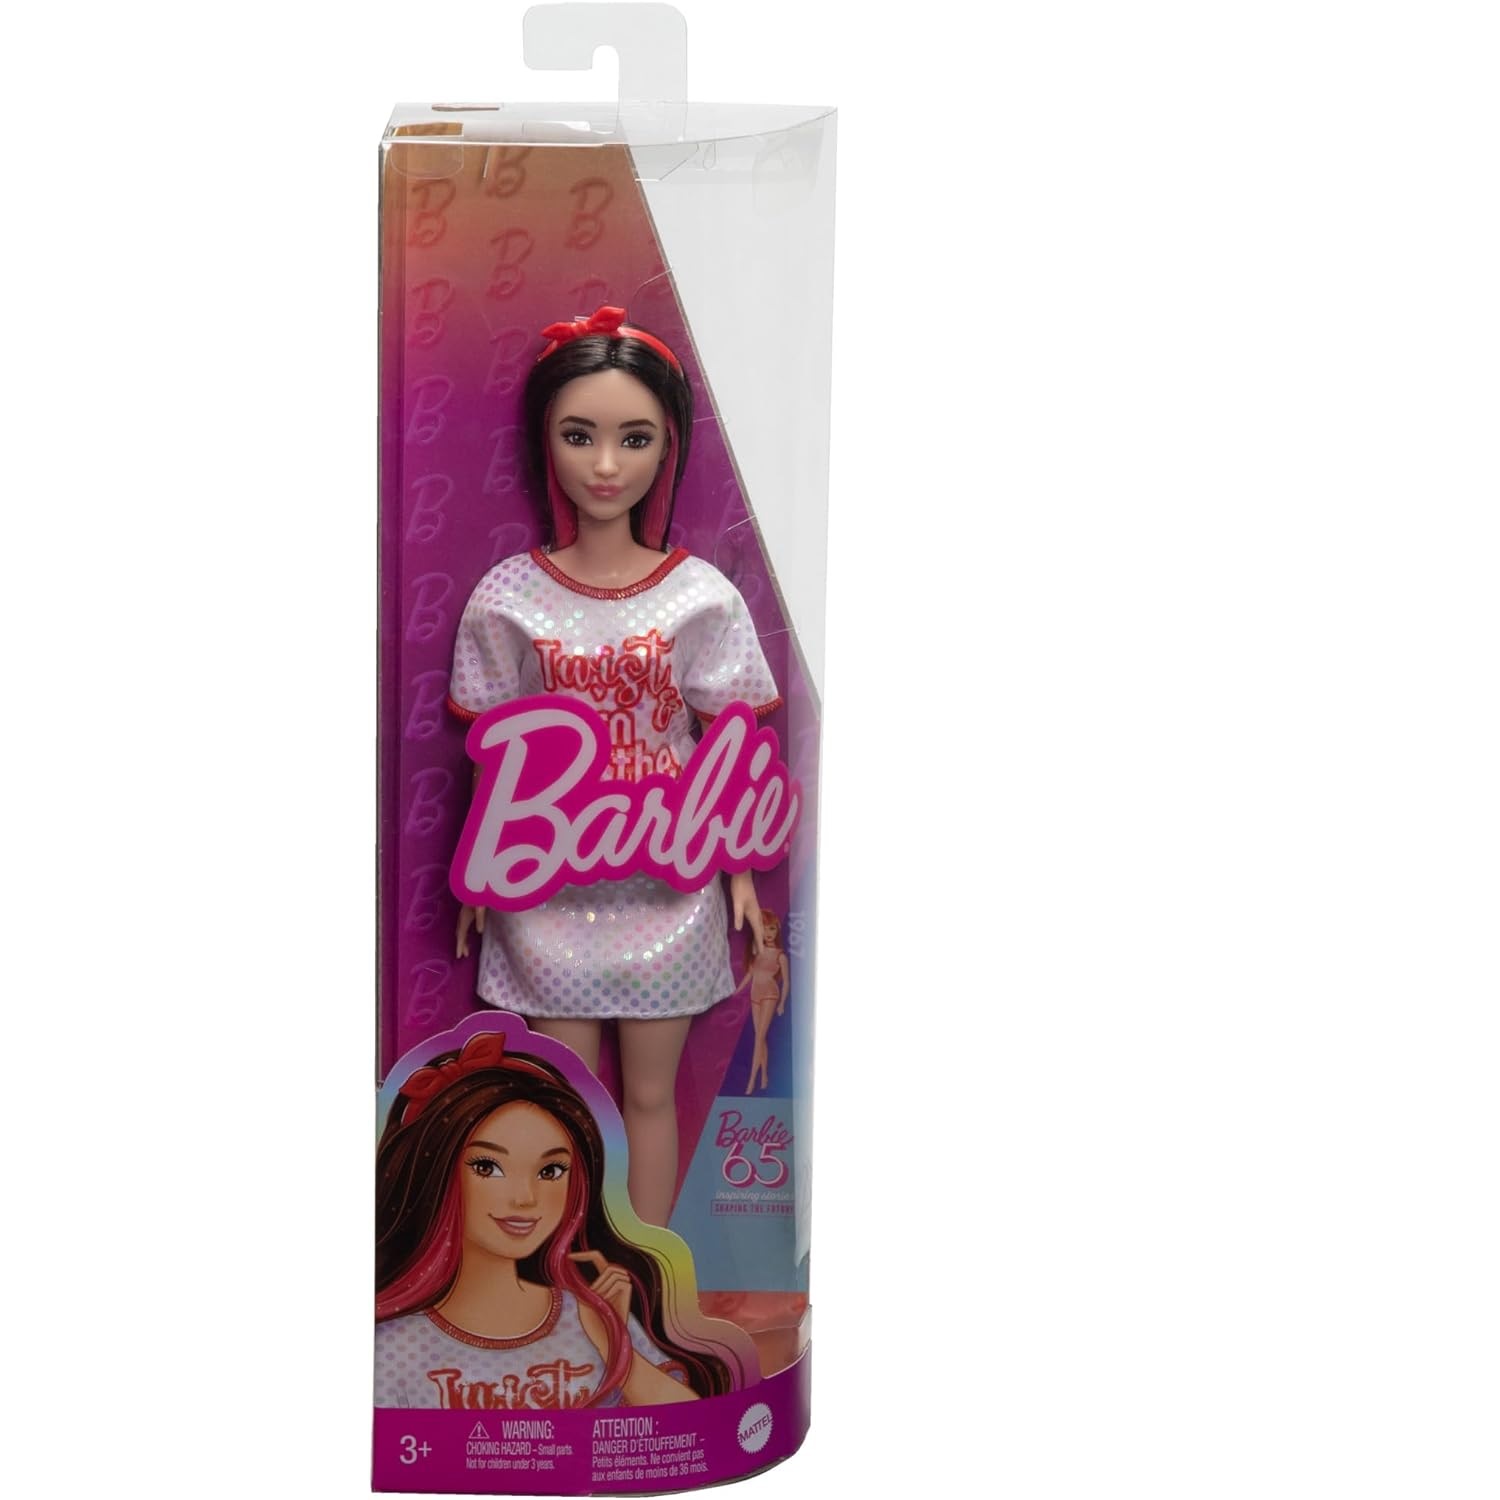 Кукла Barbie HRH12 214 платье Twist 'n Turn